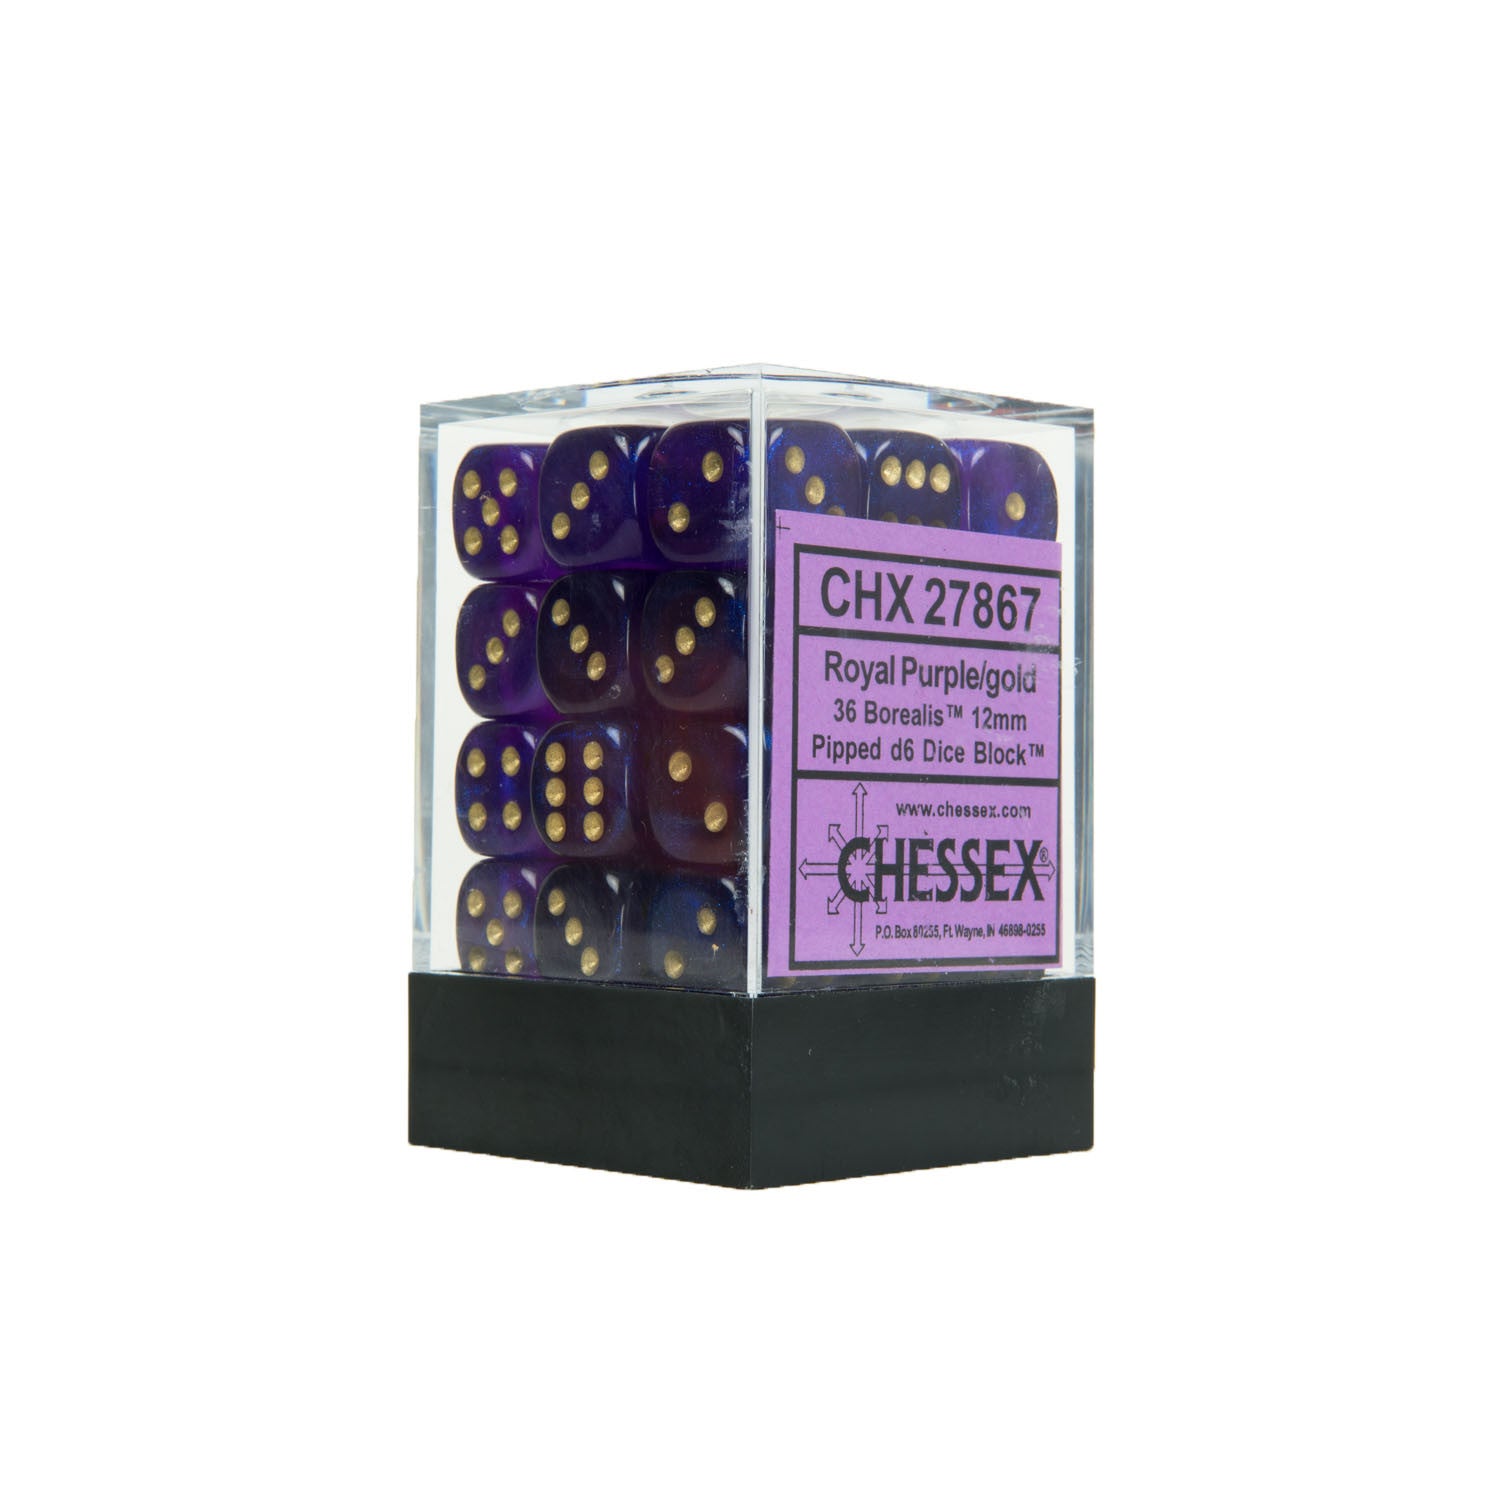 Chessex CHX27867 36 Royal Purple w/ gold Borealis™ 12mm d6 Dice Block